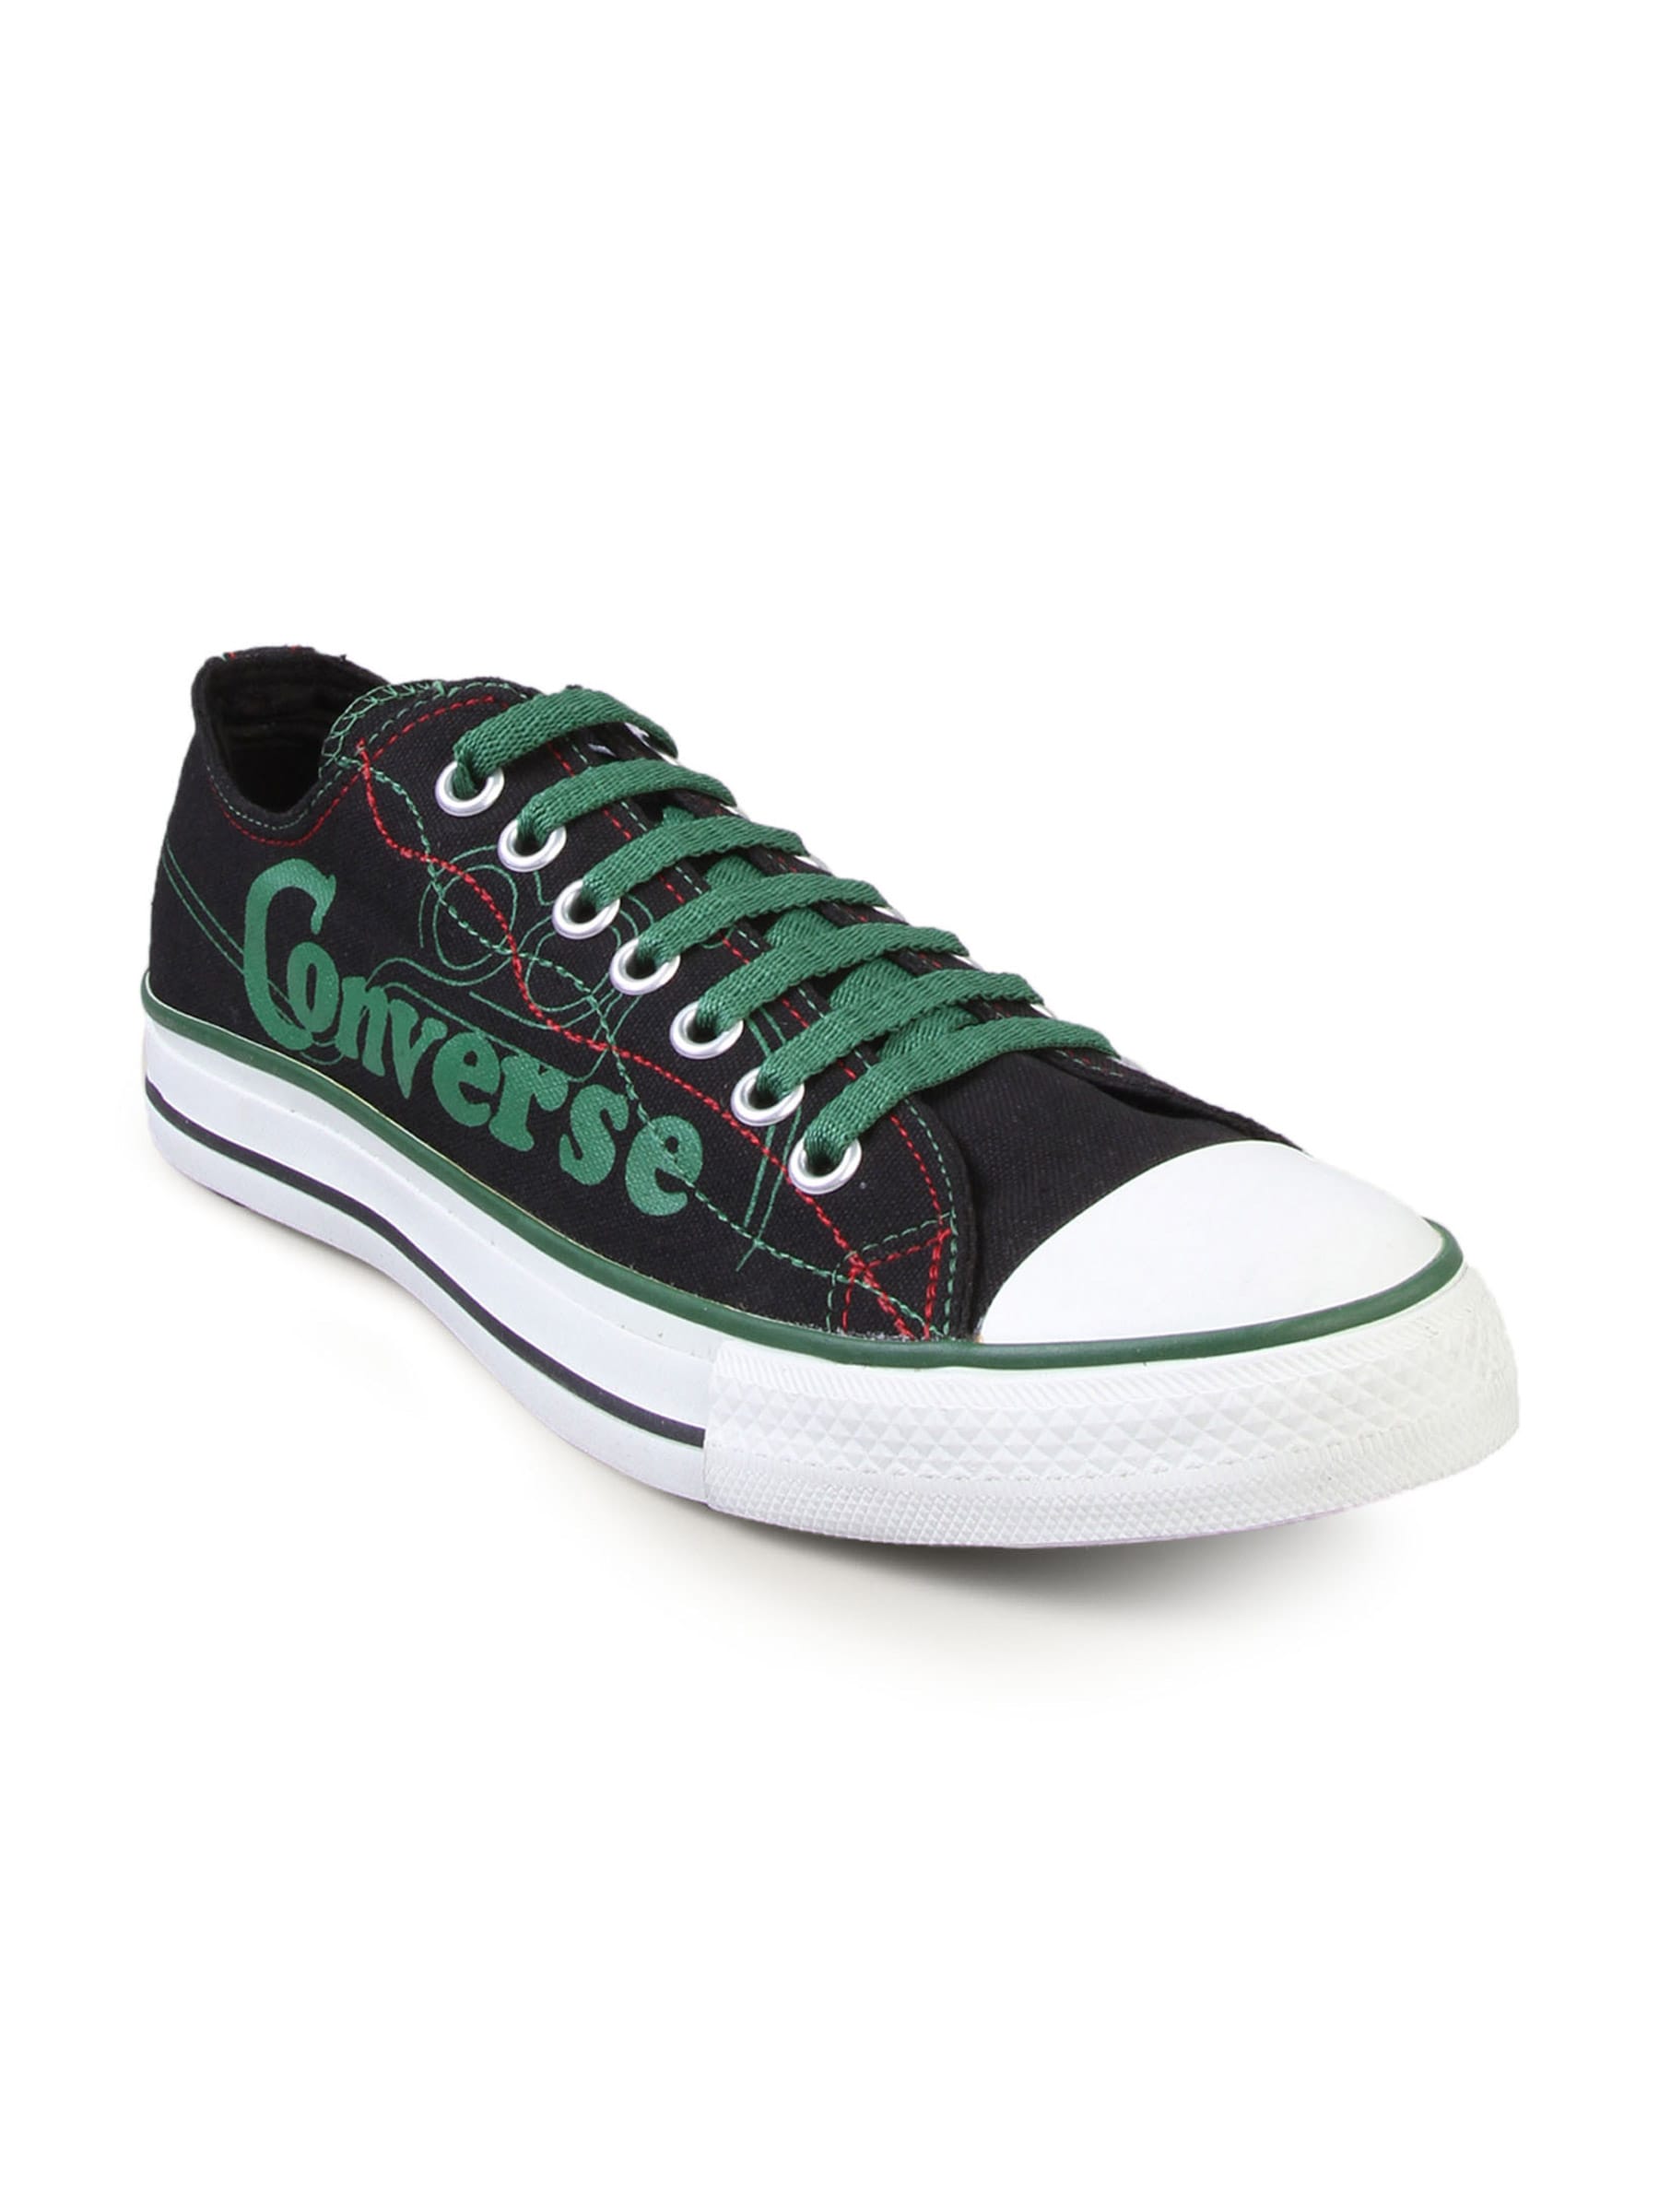 Converse Men's Chuck Taylor Print OX Black Canvas Shoe